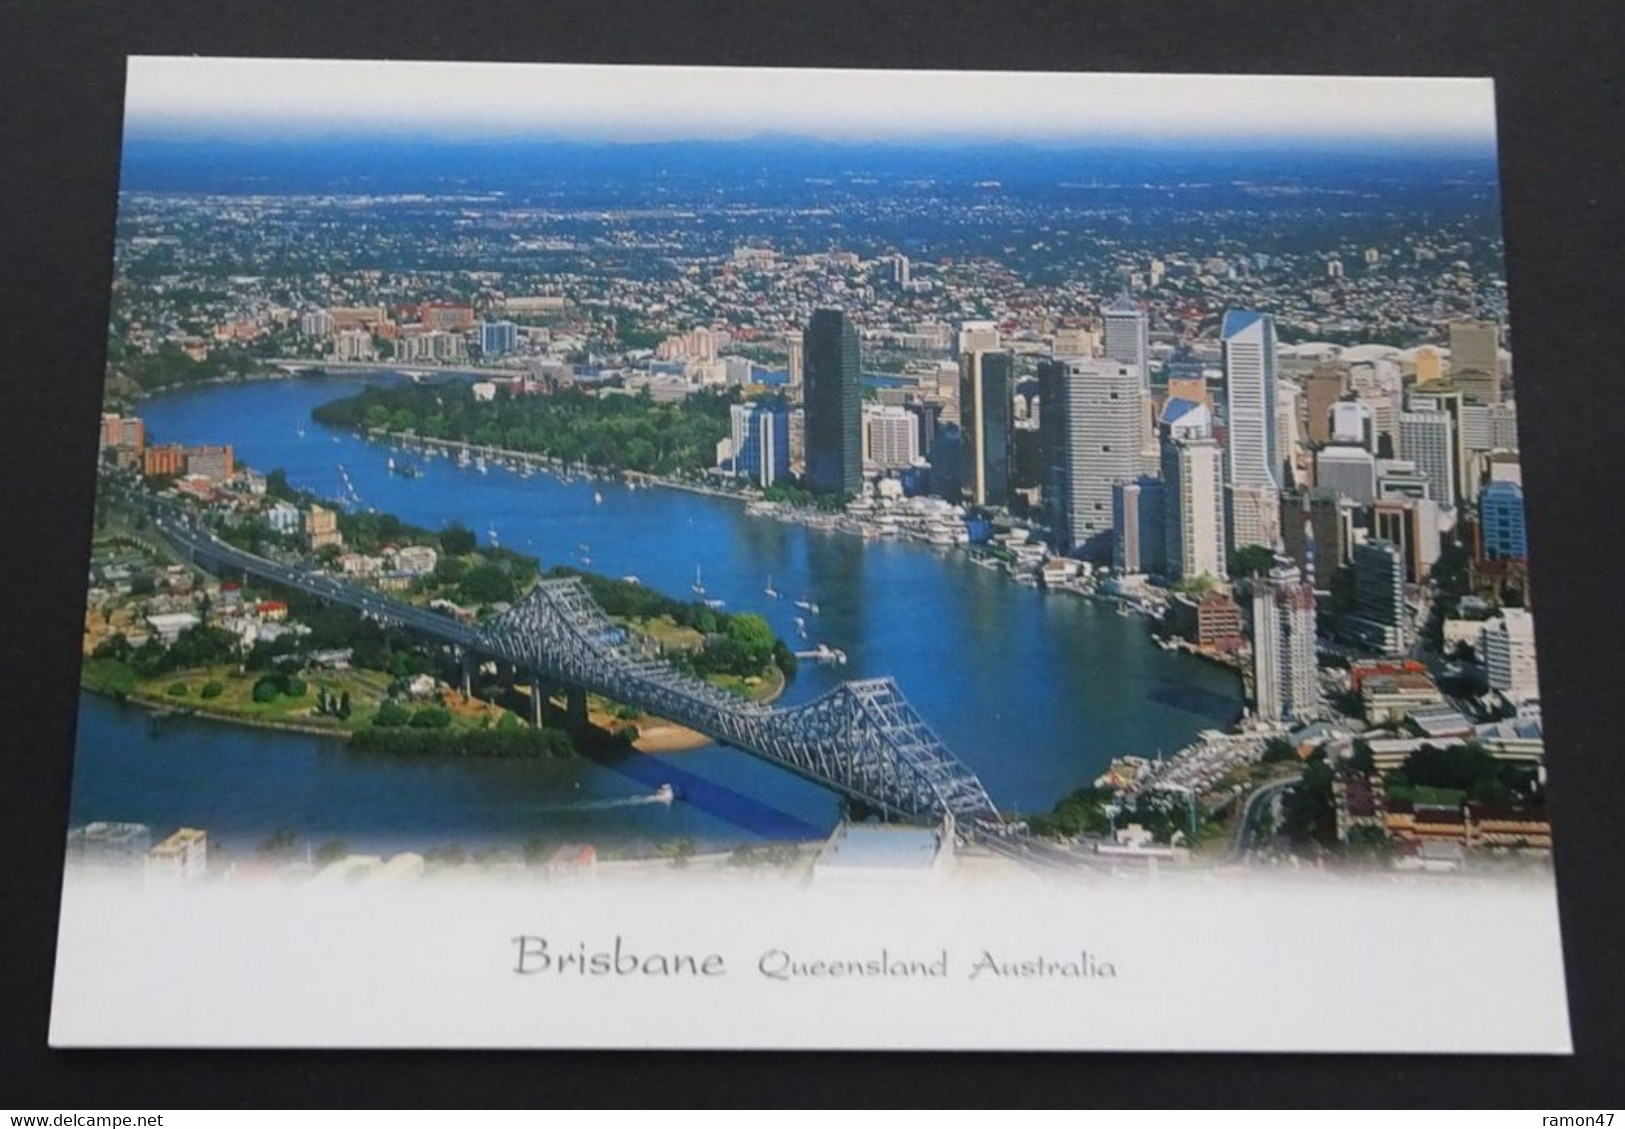 Brisbane - Queensland - Aerial View Of Brisbane River And City Featuring Story Bridge - Brisbane